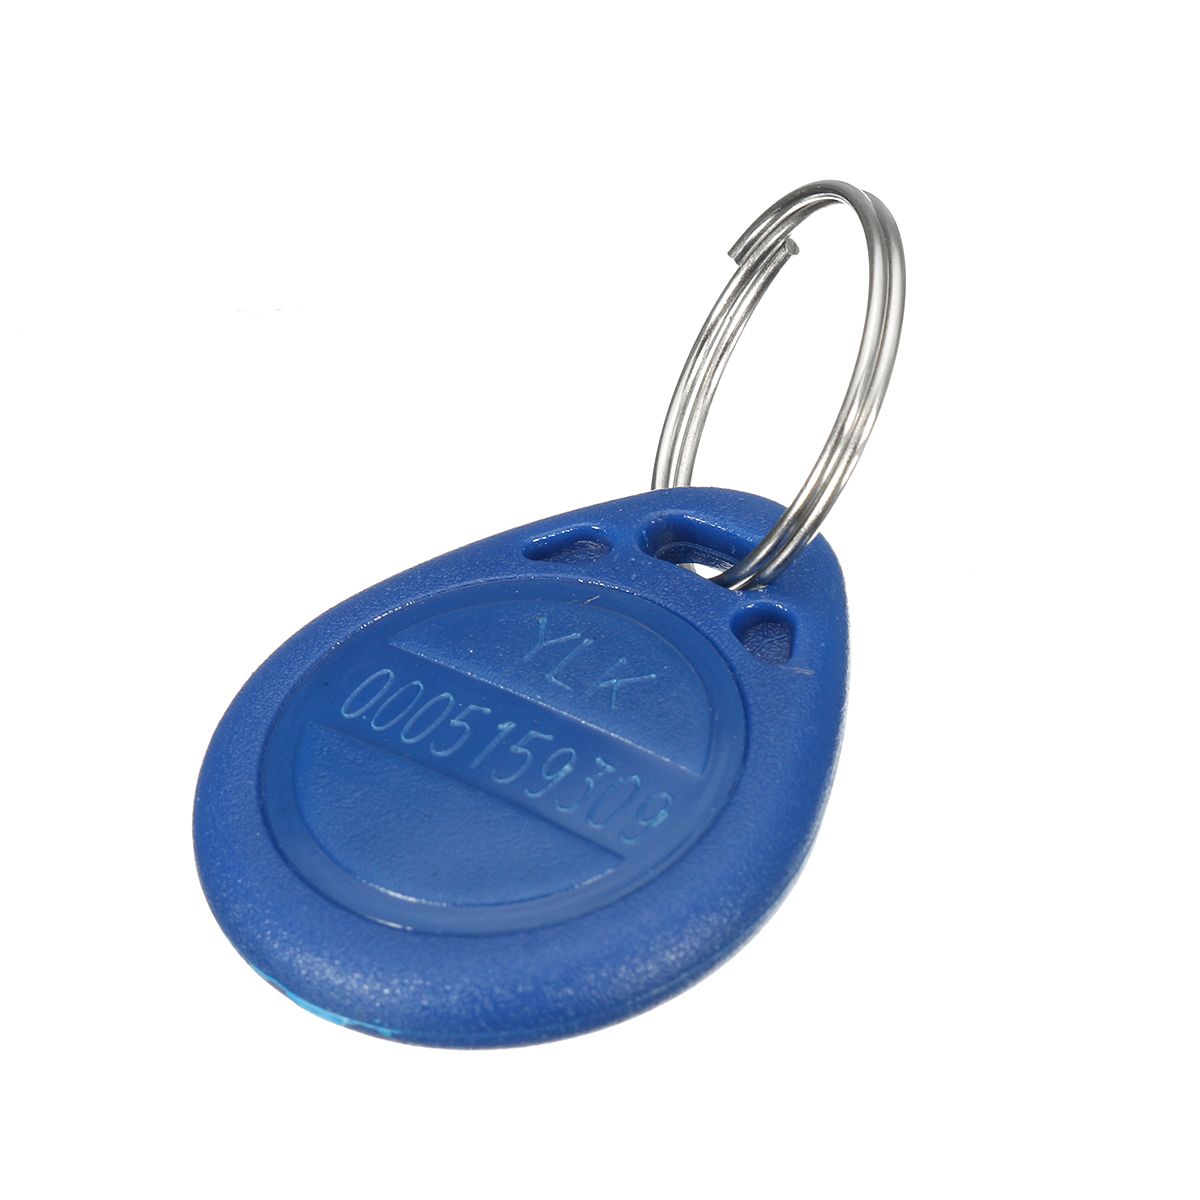 5Pcs-ID-Keyfbobs-RFID-Tag-Key-Ring-Card-125KHZ-Proximity-Token-Access-Control-Attendance-TK4100-1147675